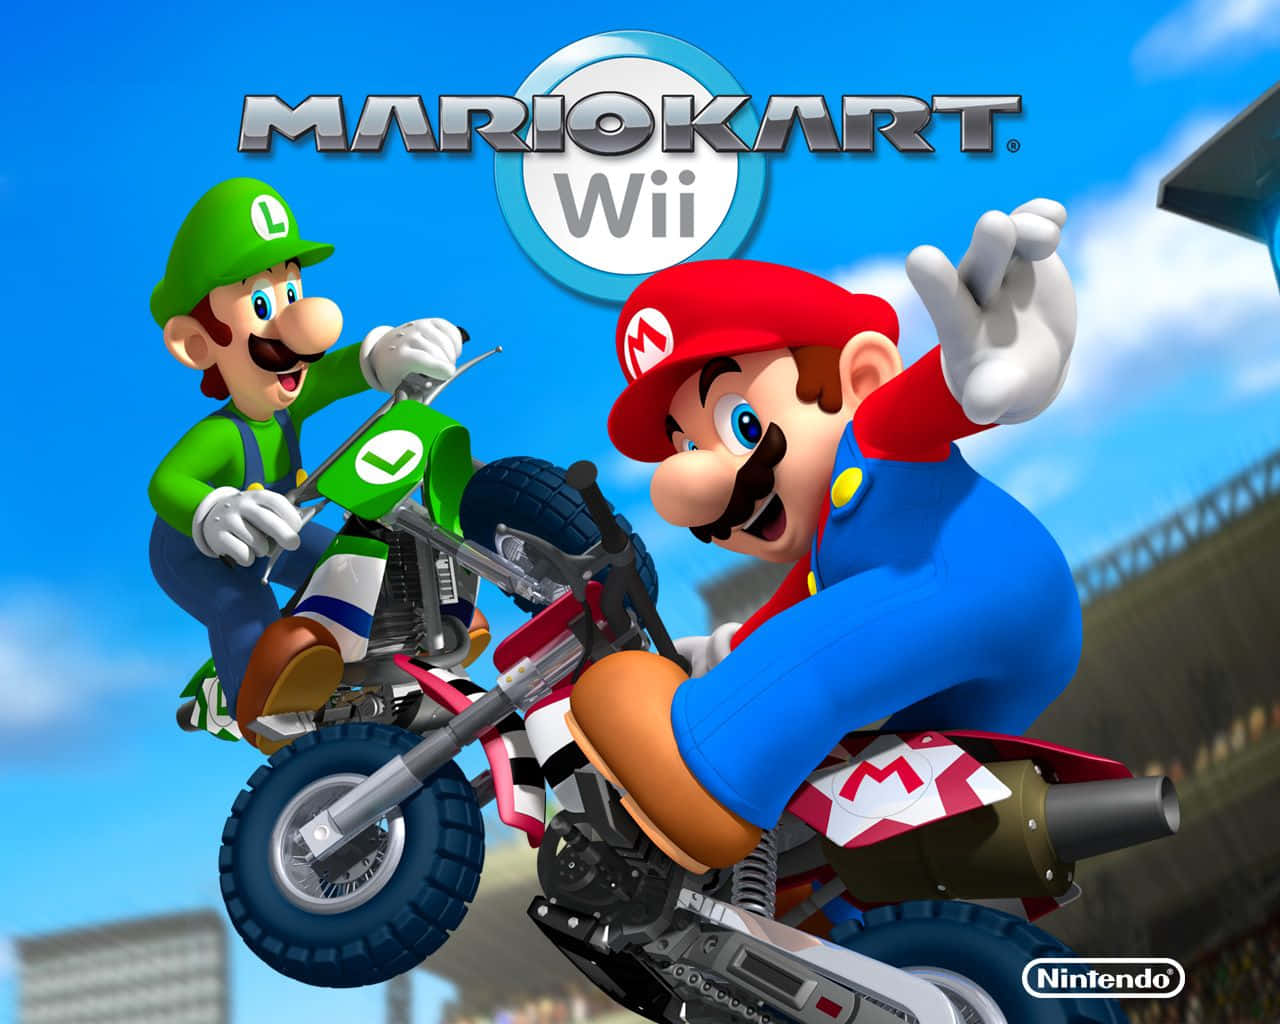 Race Through the Mario Kart Track!